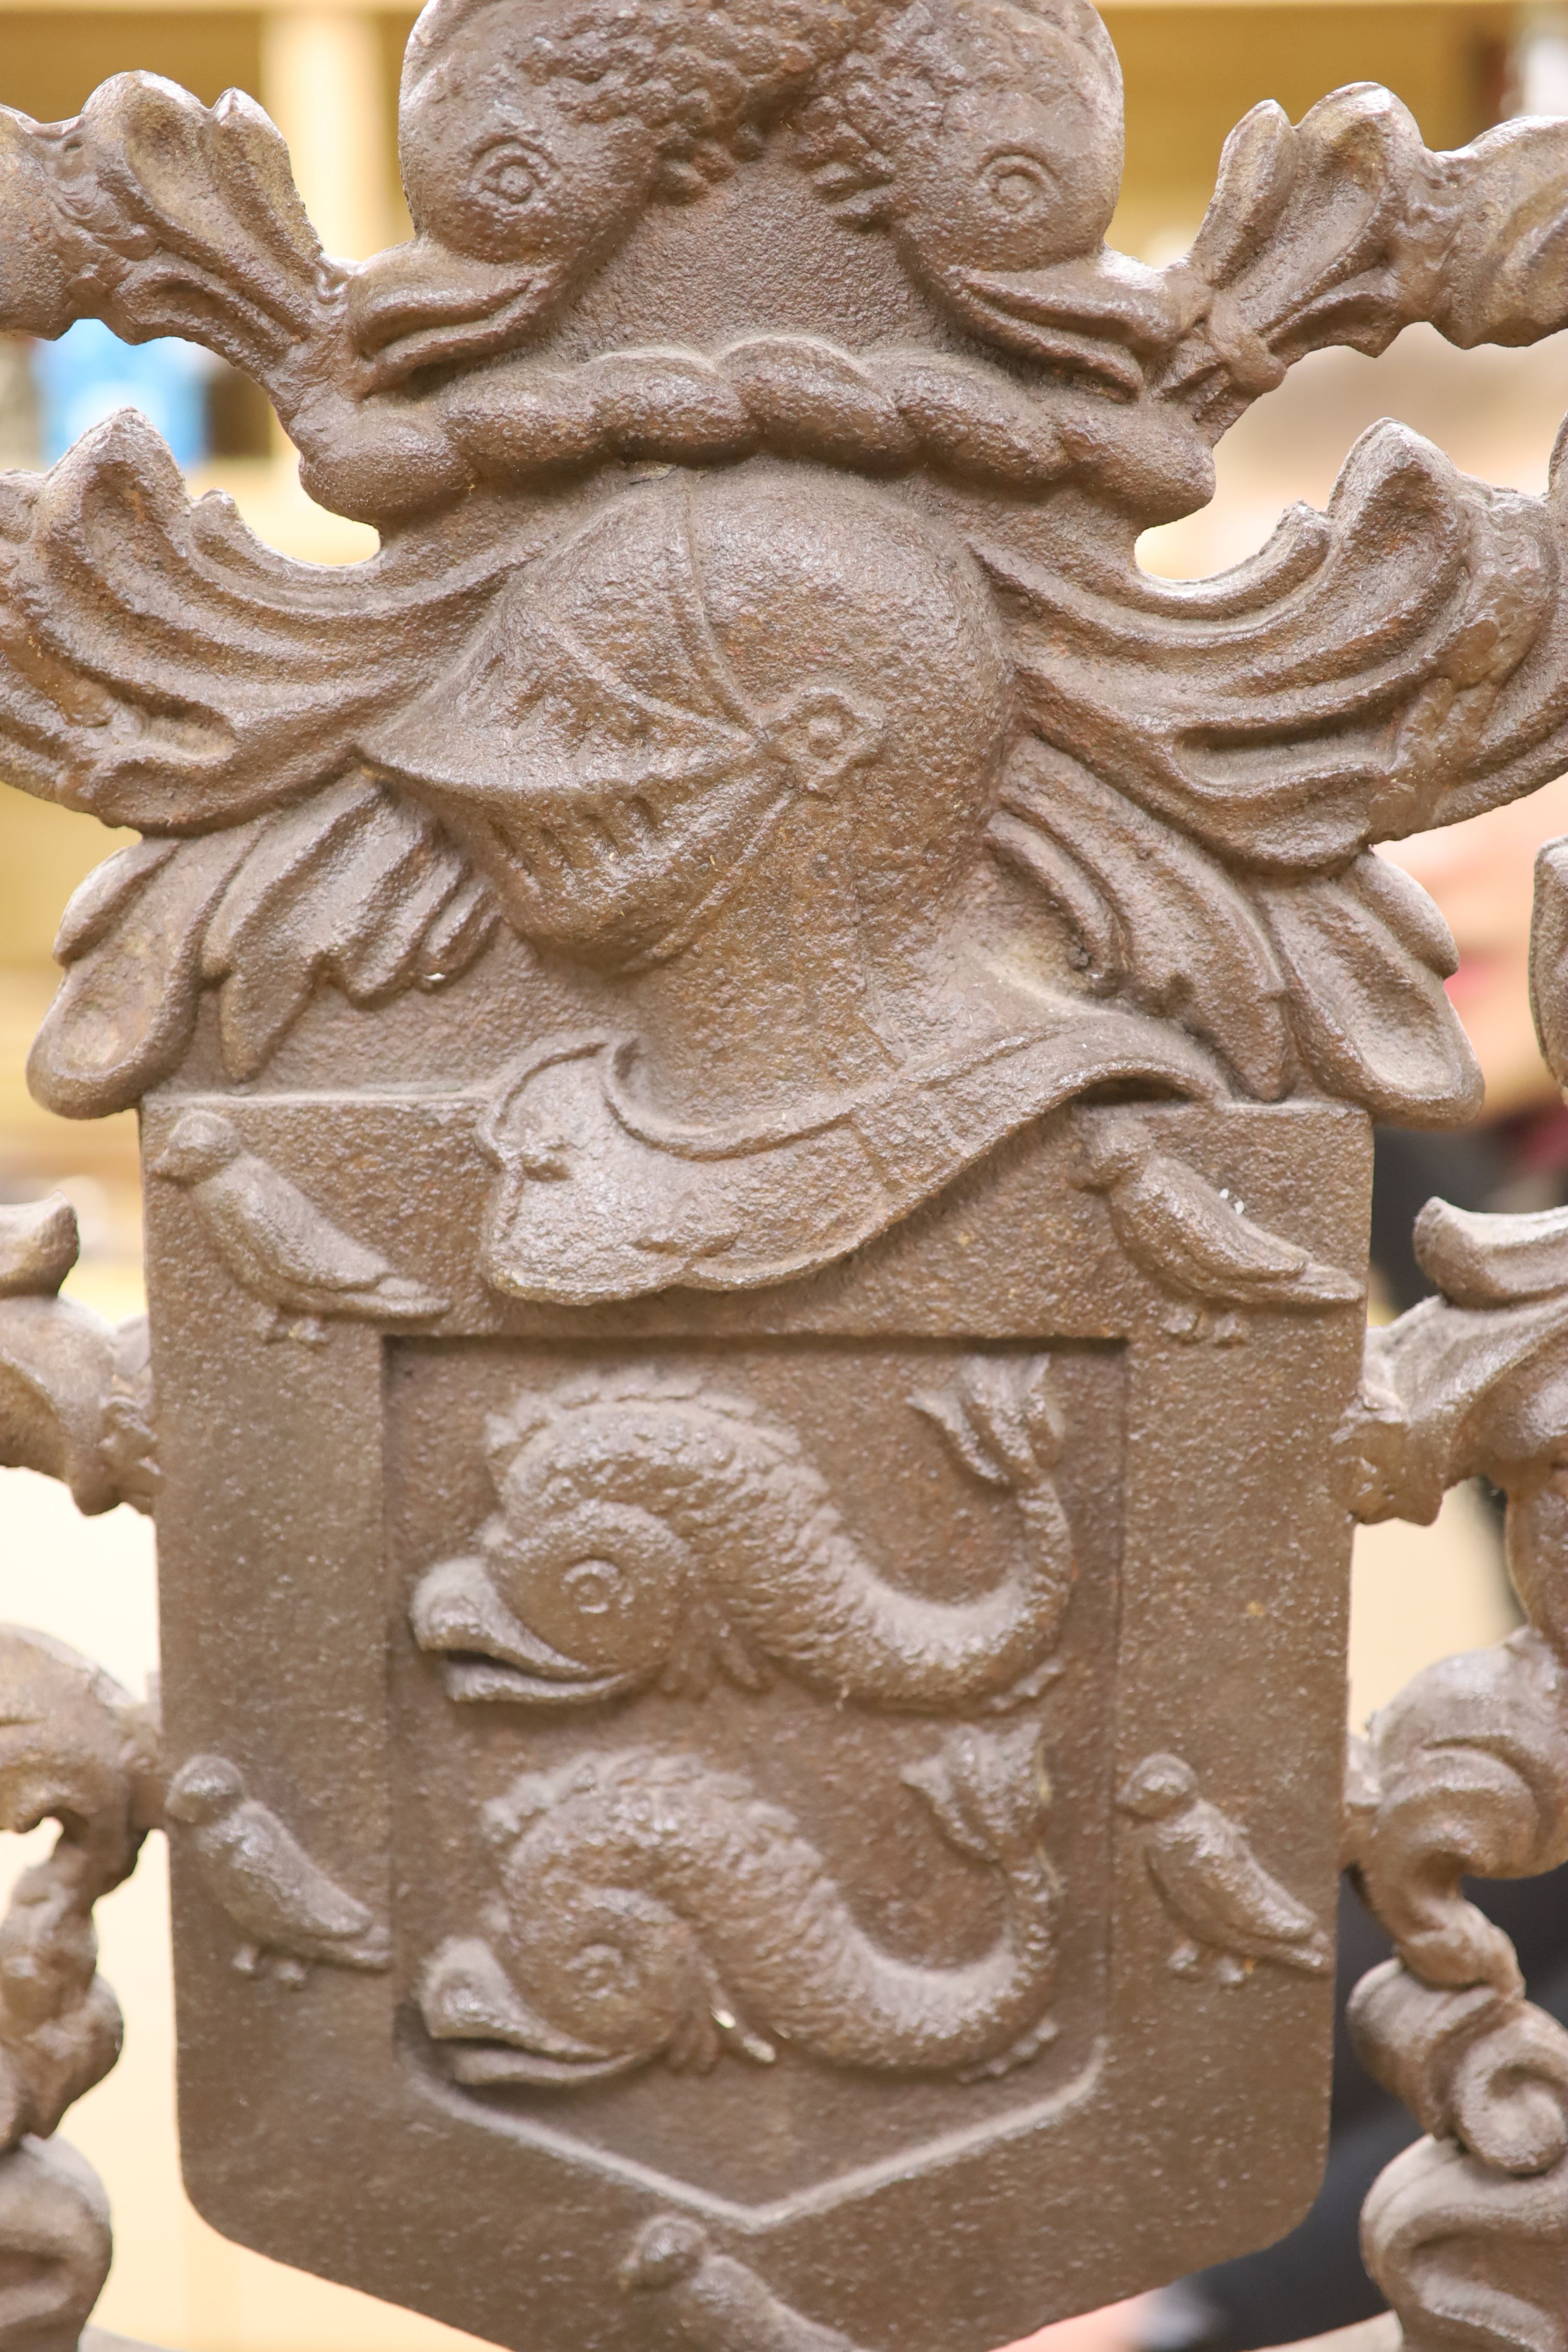 A cast iron armorial crest, height 70cm